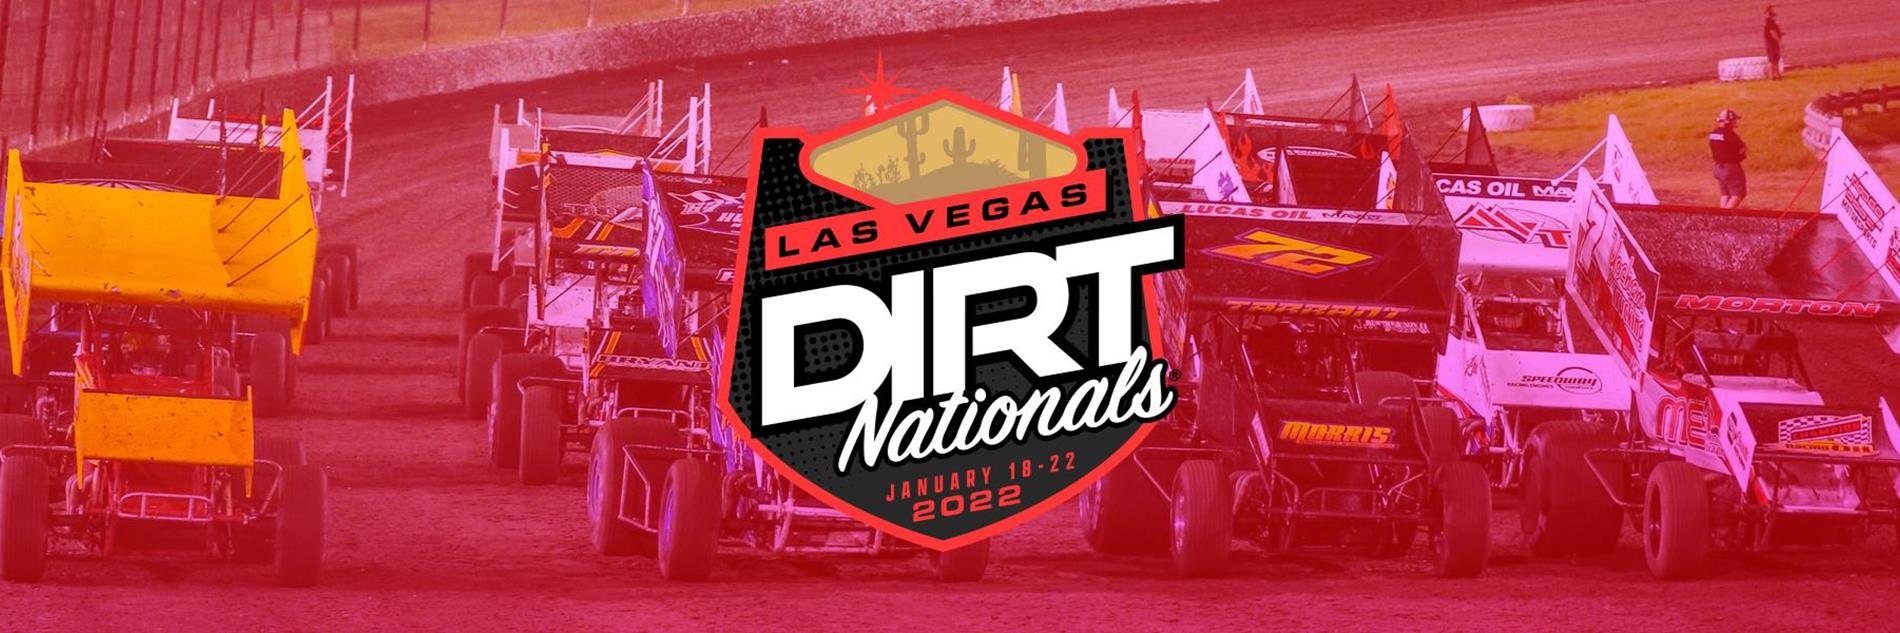 Las Vegas Dirt Nationals